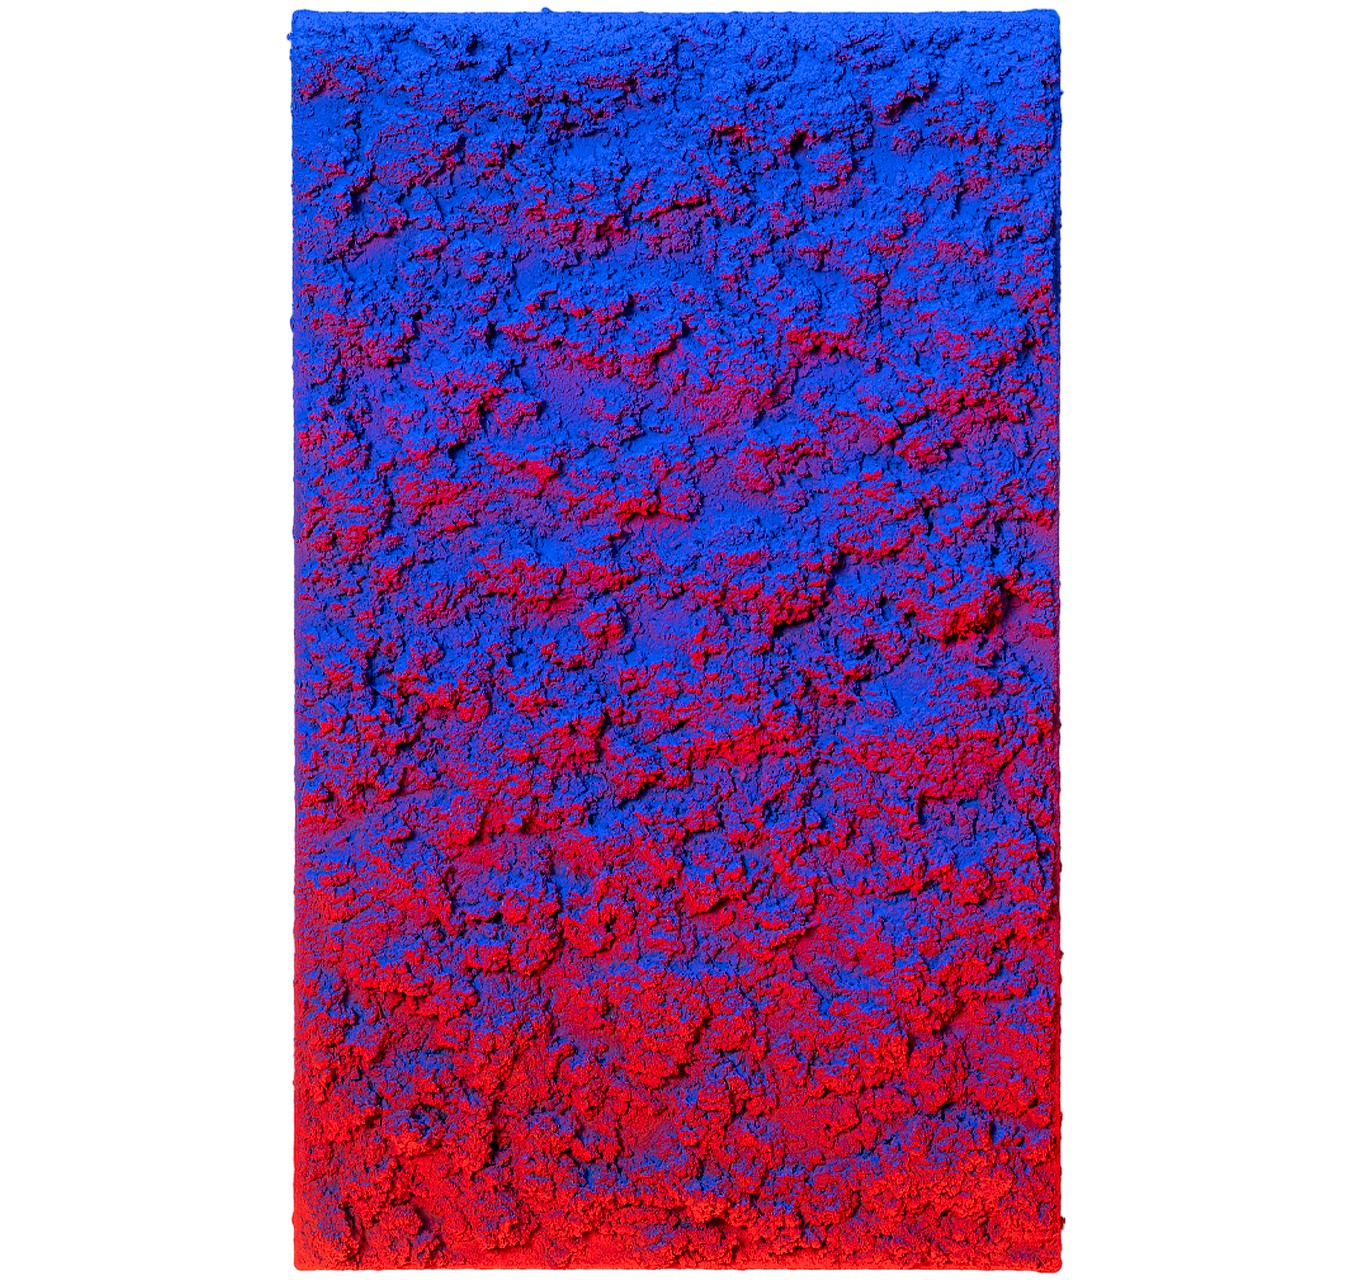 Interstellar Red Blue 18.12 - SAMUEL DEJONG - Galeries Bartoux